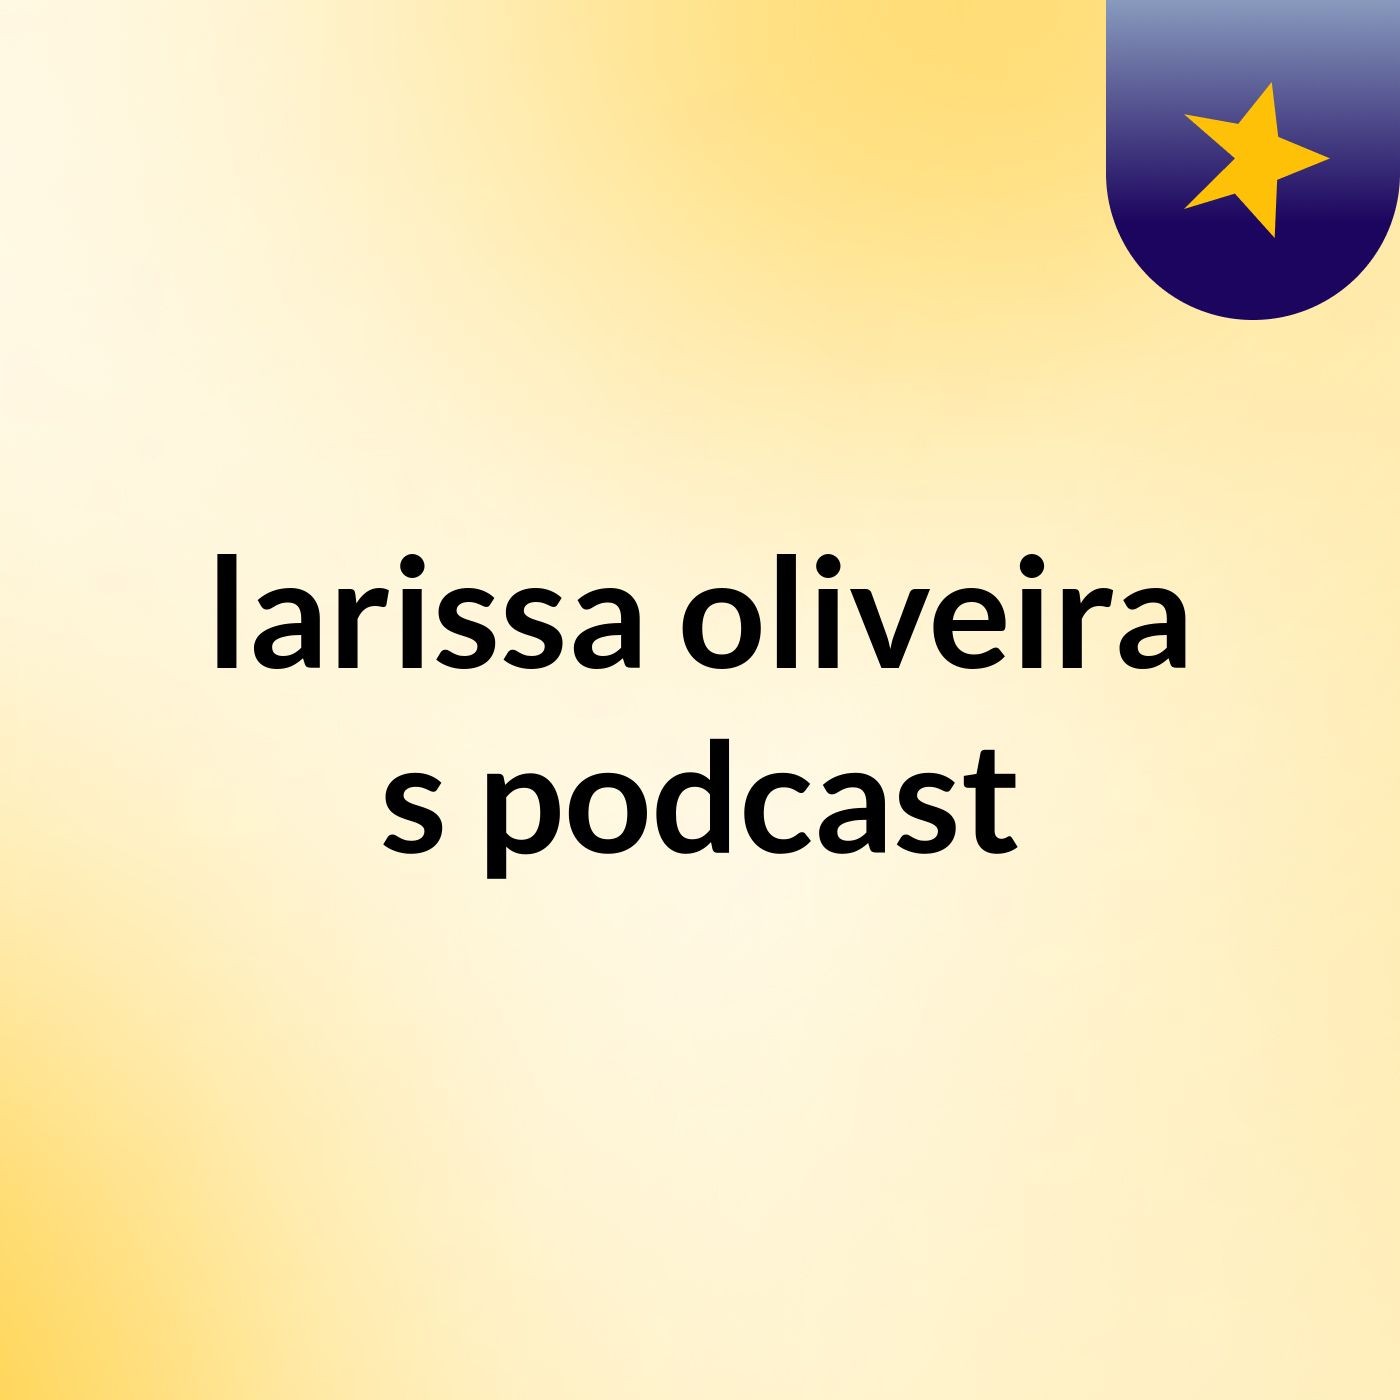 larissa oliveira's podcast